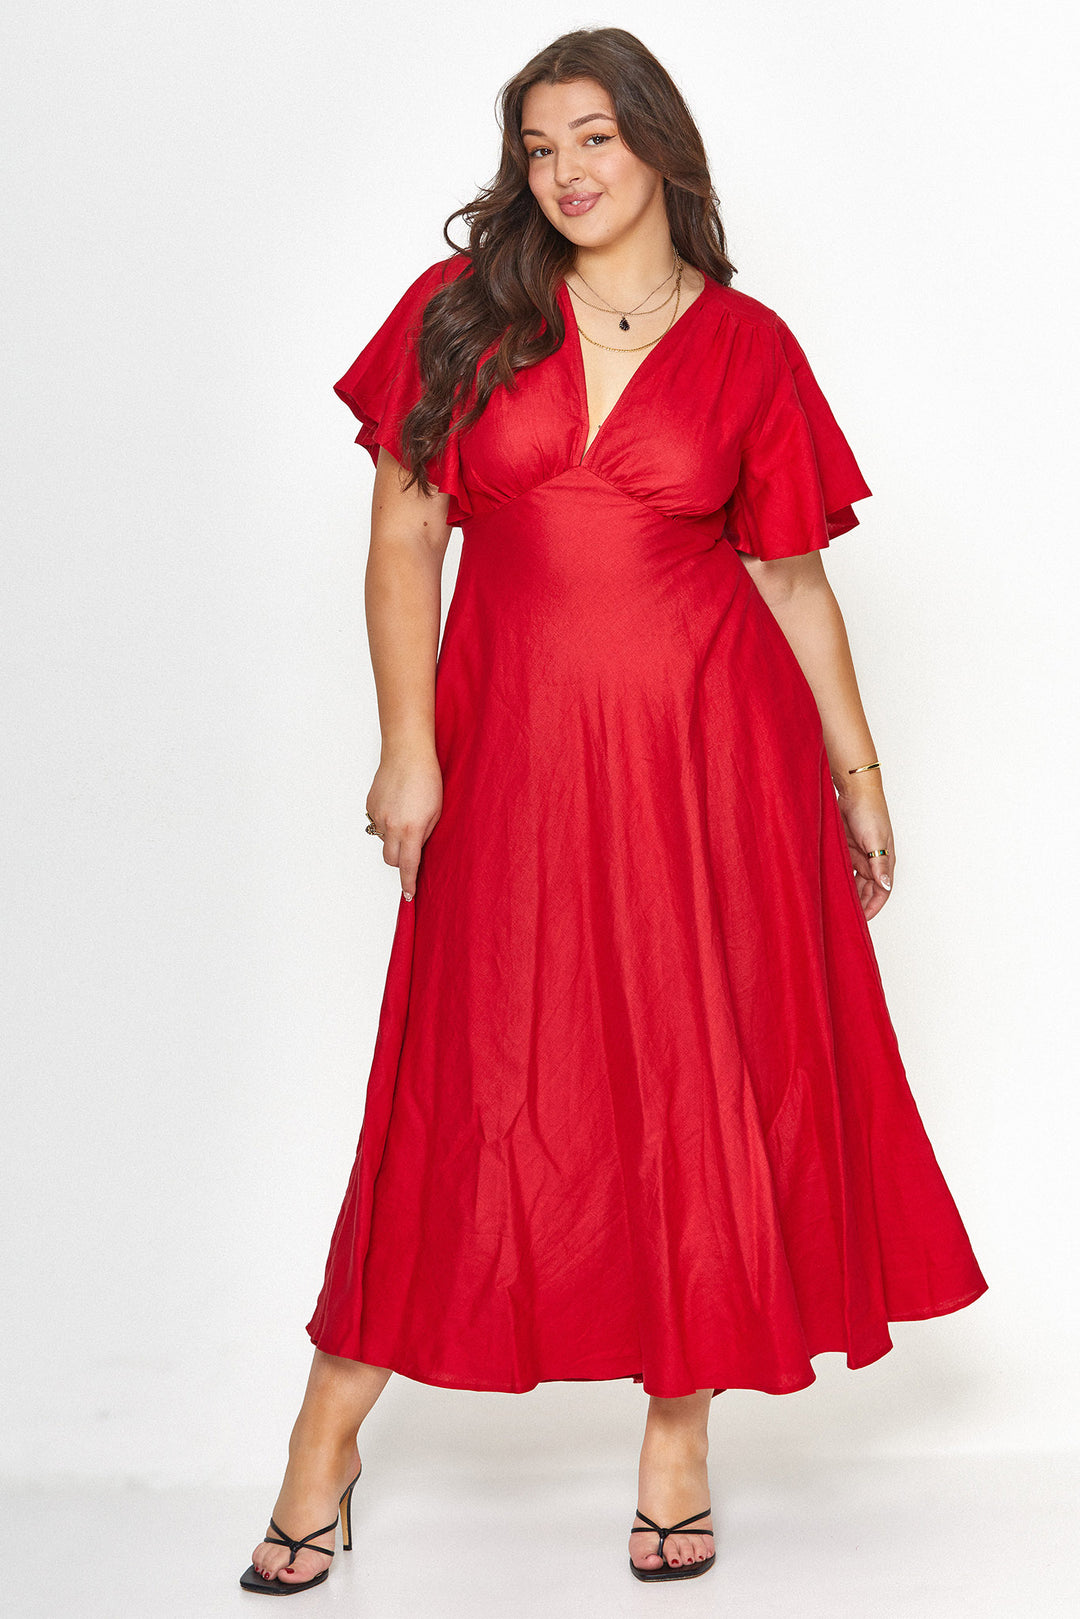 Athena Rose Red Dress